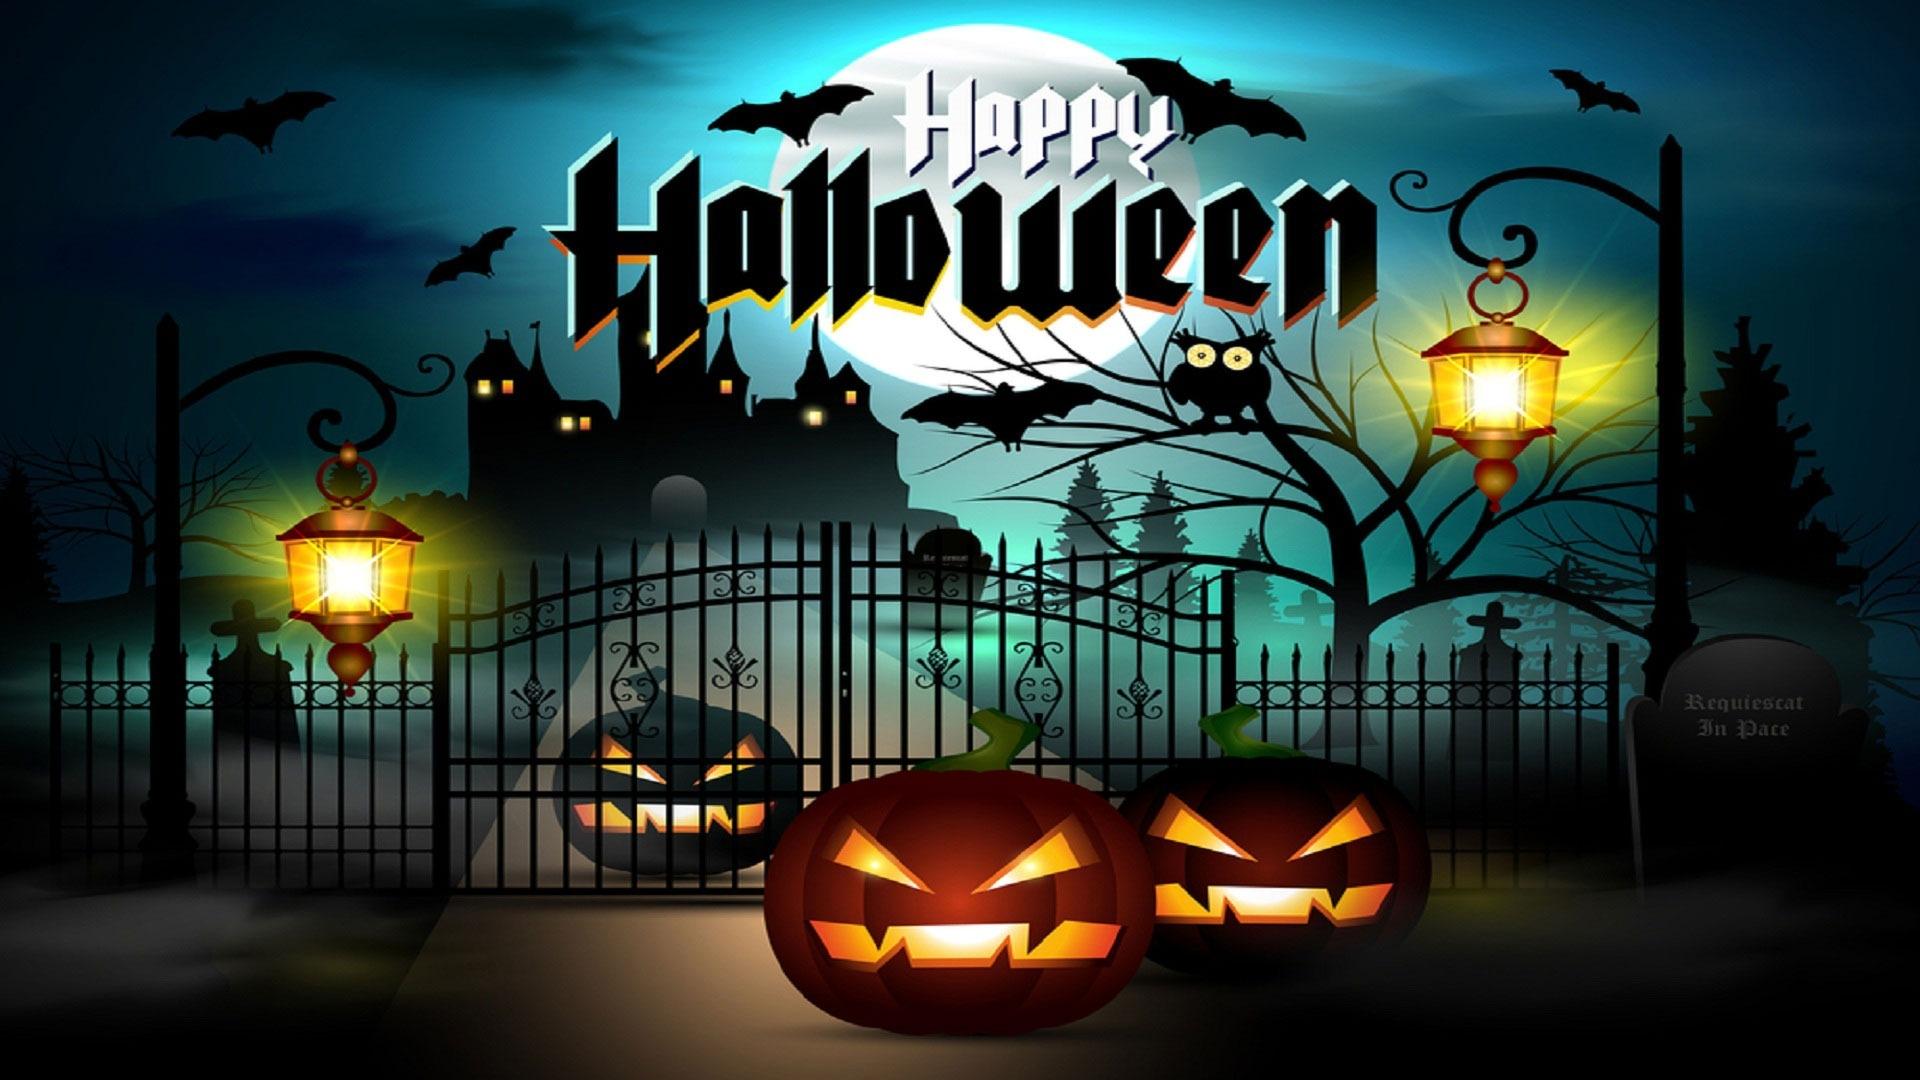 Scary Halloween Wallpaper HDfoto.com